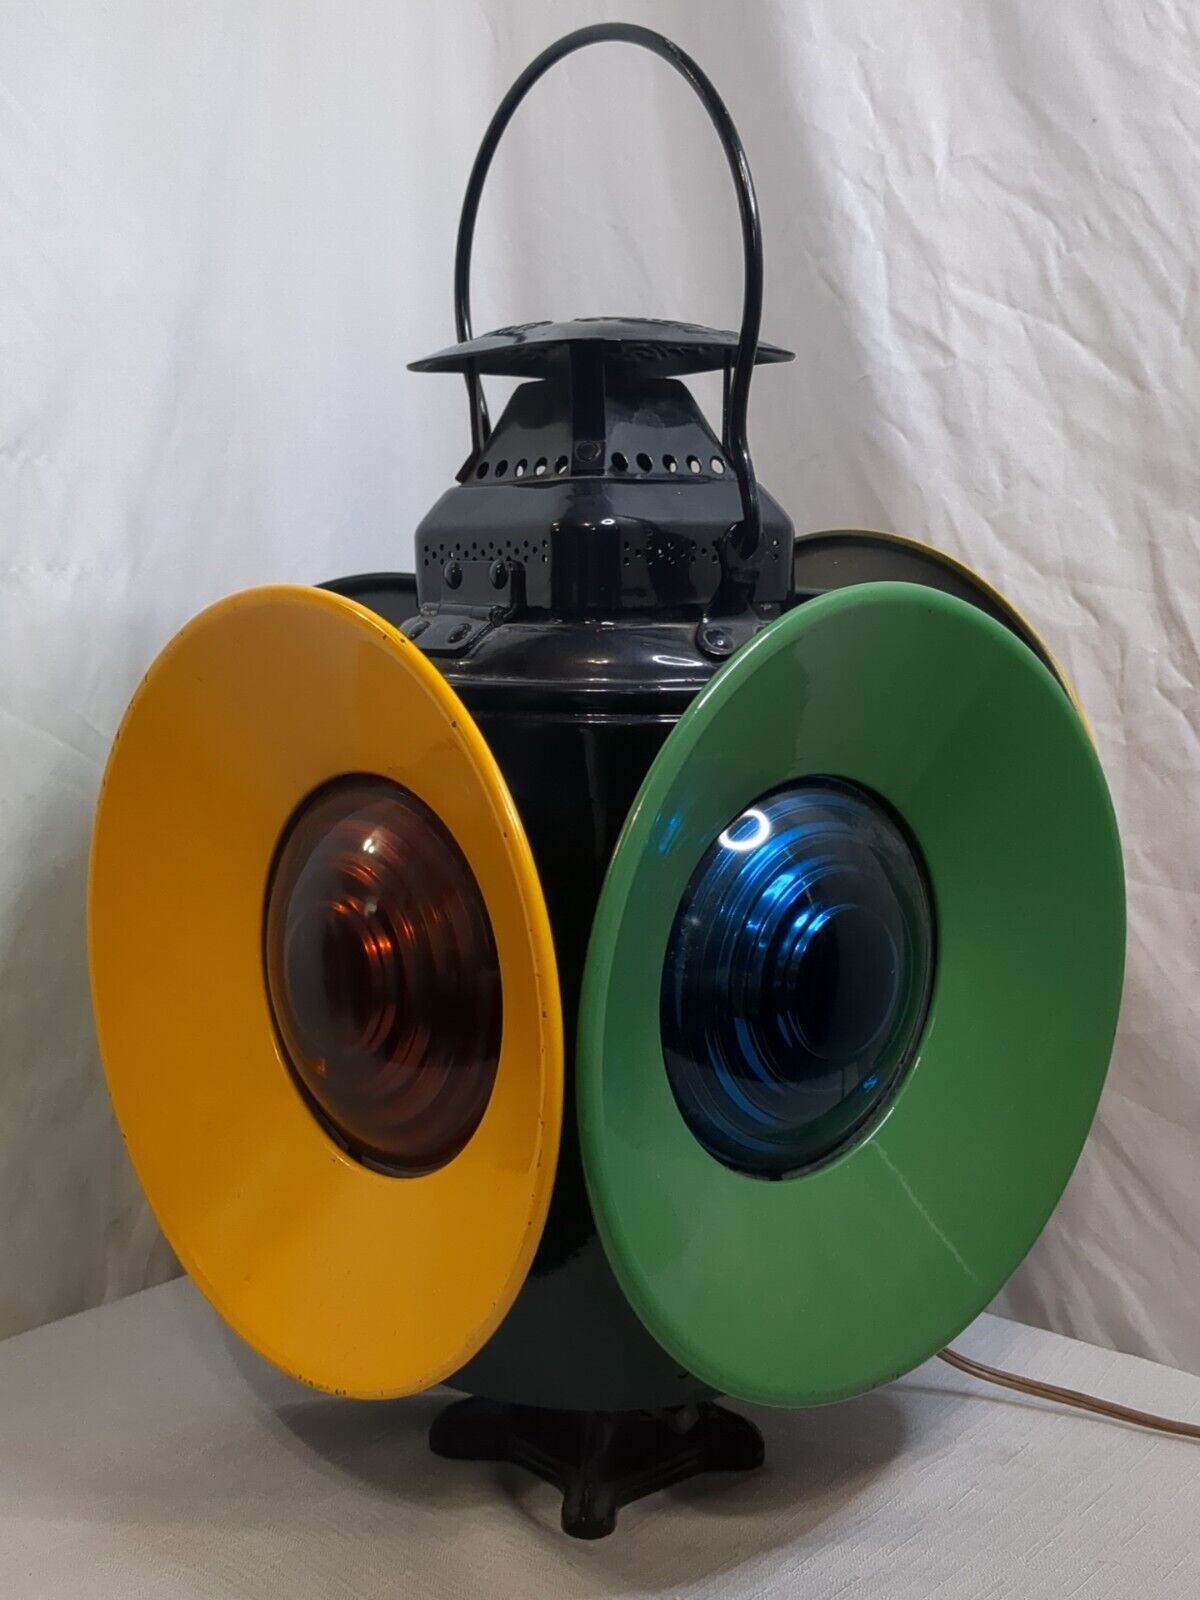 Vintage Adlake Non-Sweating Railroad Switch Signal Lantern Lamp Chicago Working